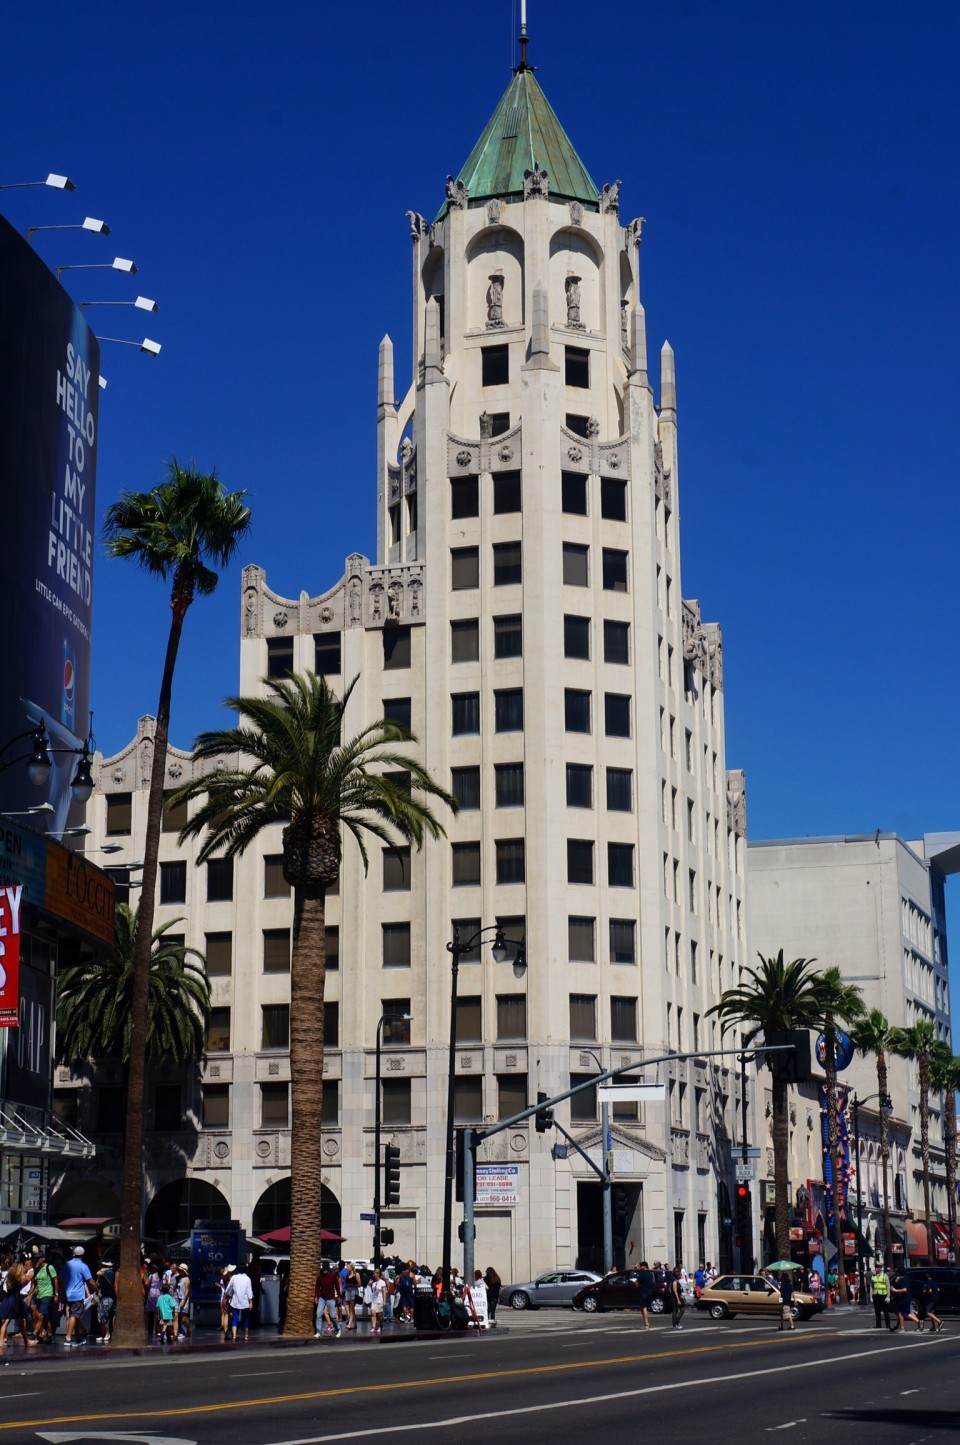 Hollywood blvd Los Angeles 